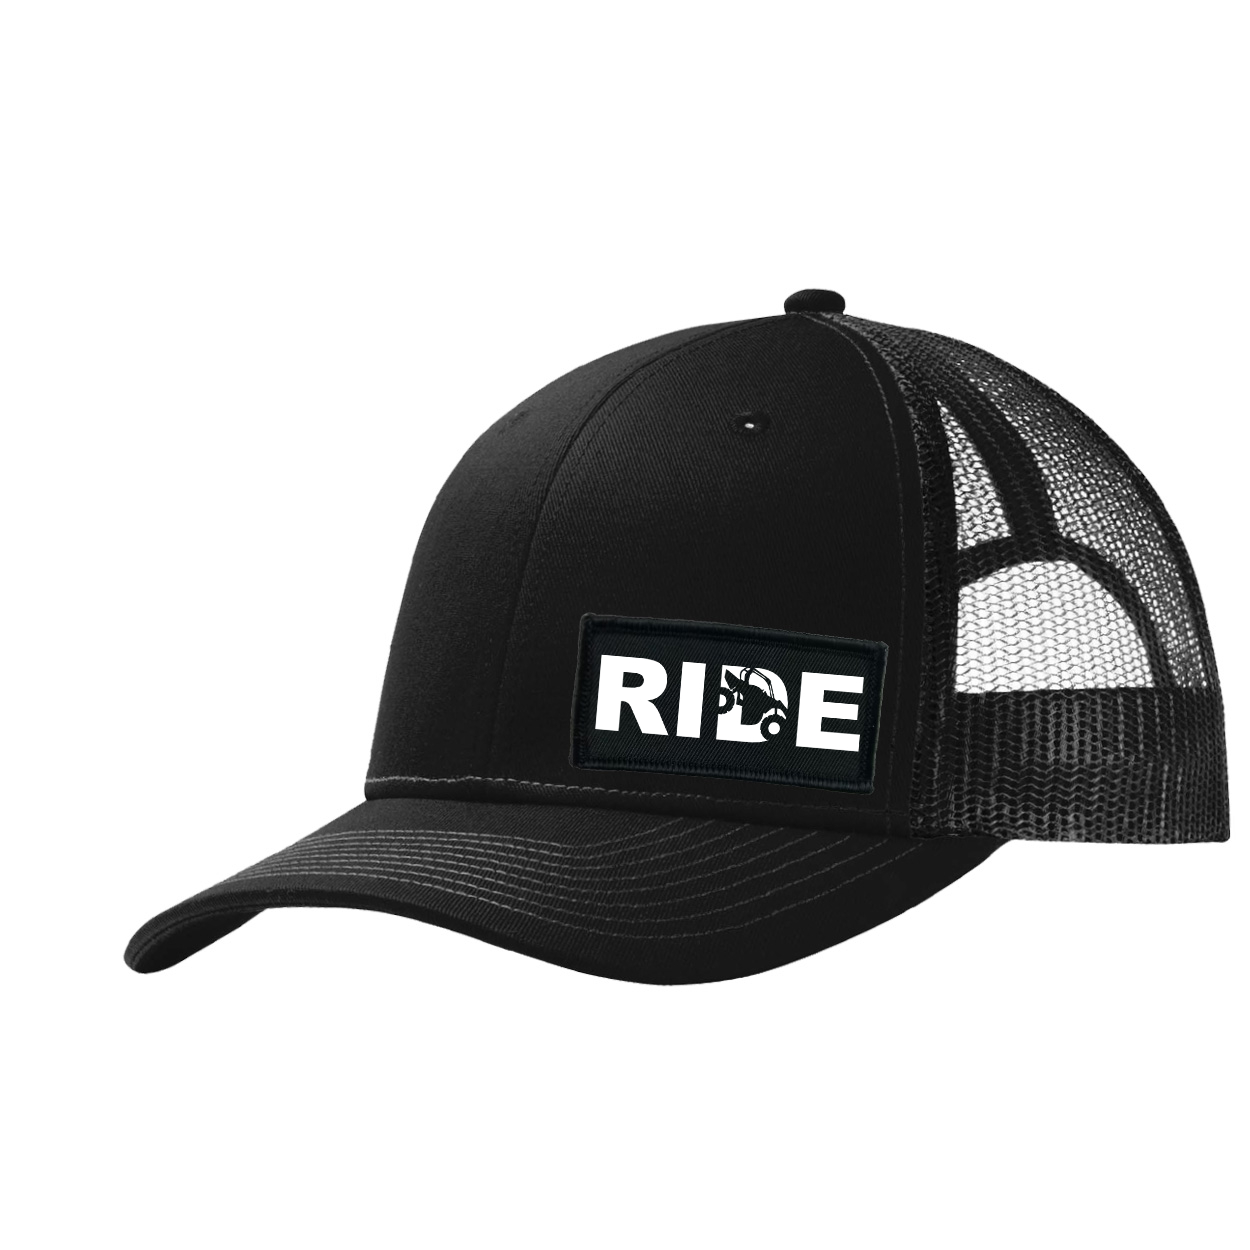 Ride UTV Logo Night Out Woven Patch Snapback Trucker Hat Black (White Logo)